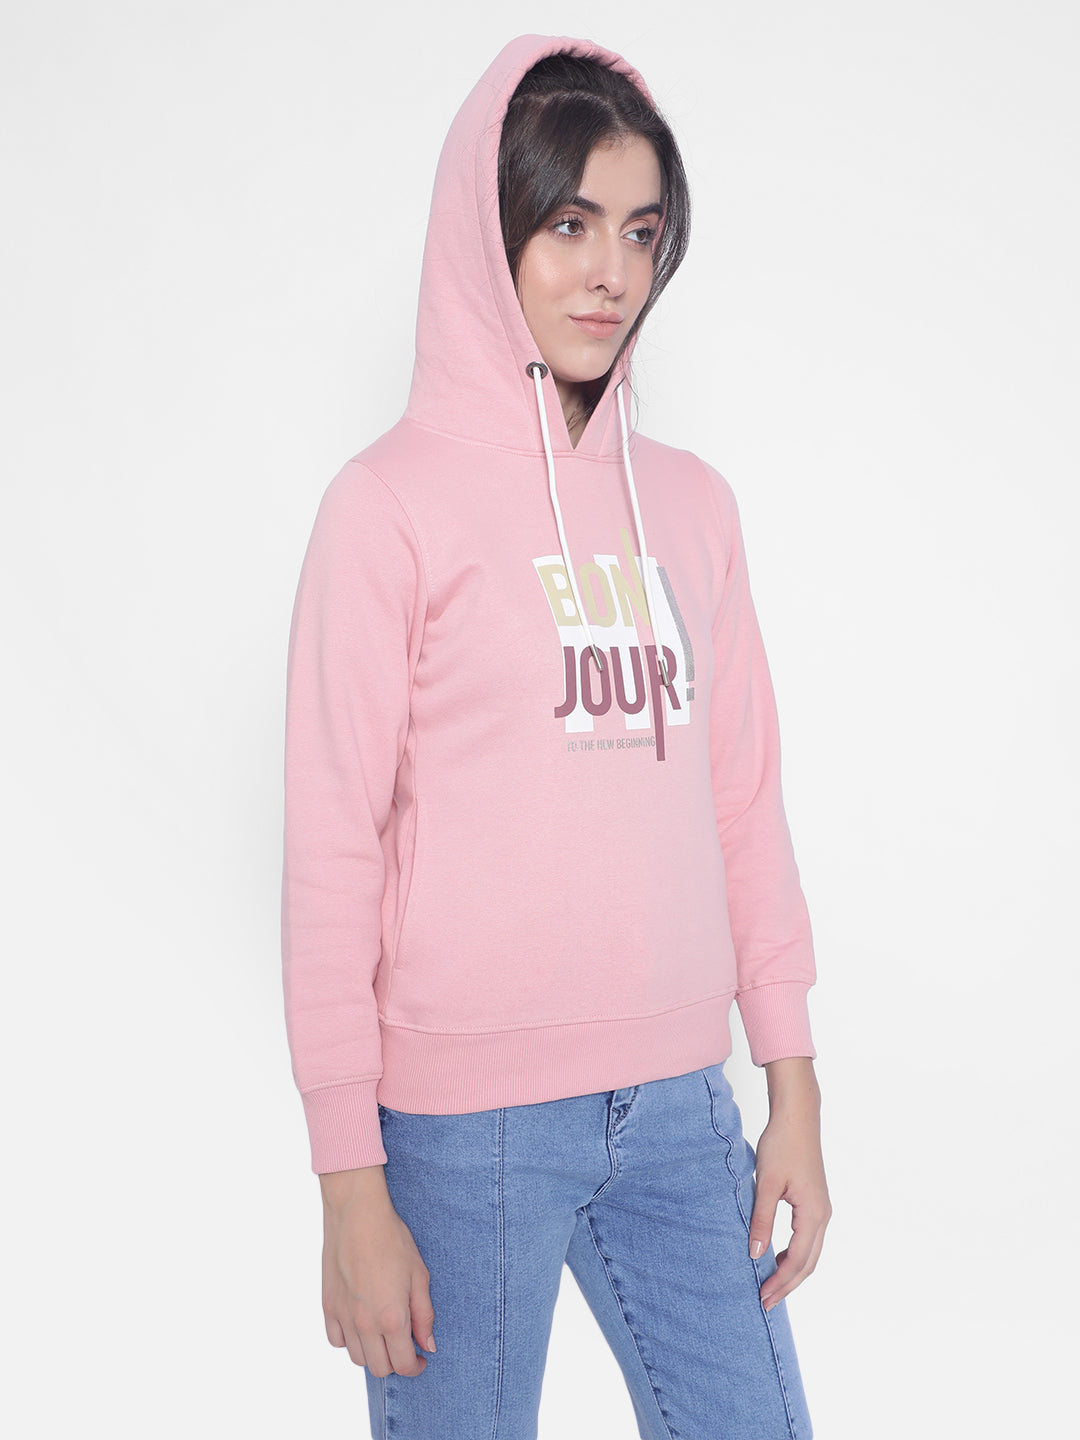 Pink Printed hooded Sweatshirt-Women Sweatshirts-Crimsoune Club